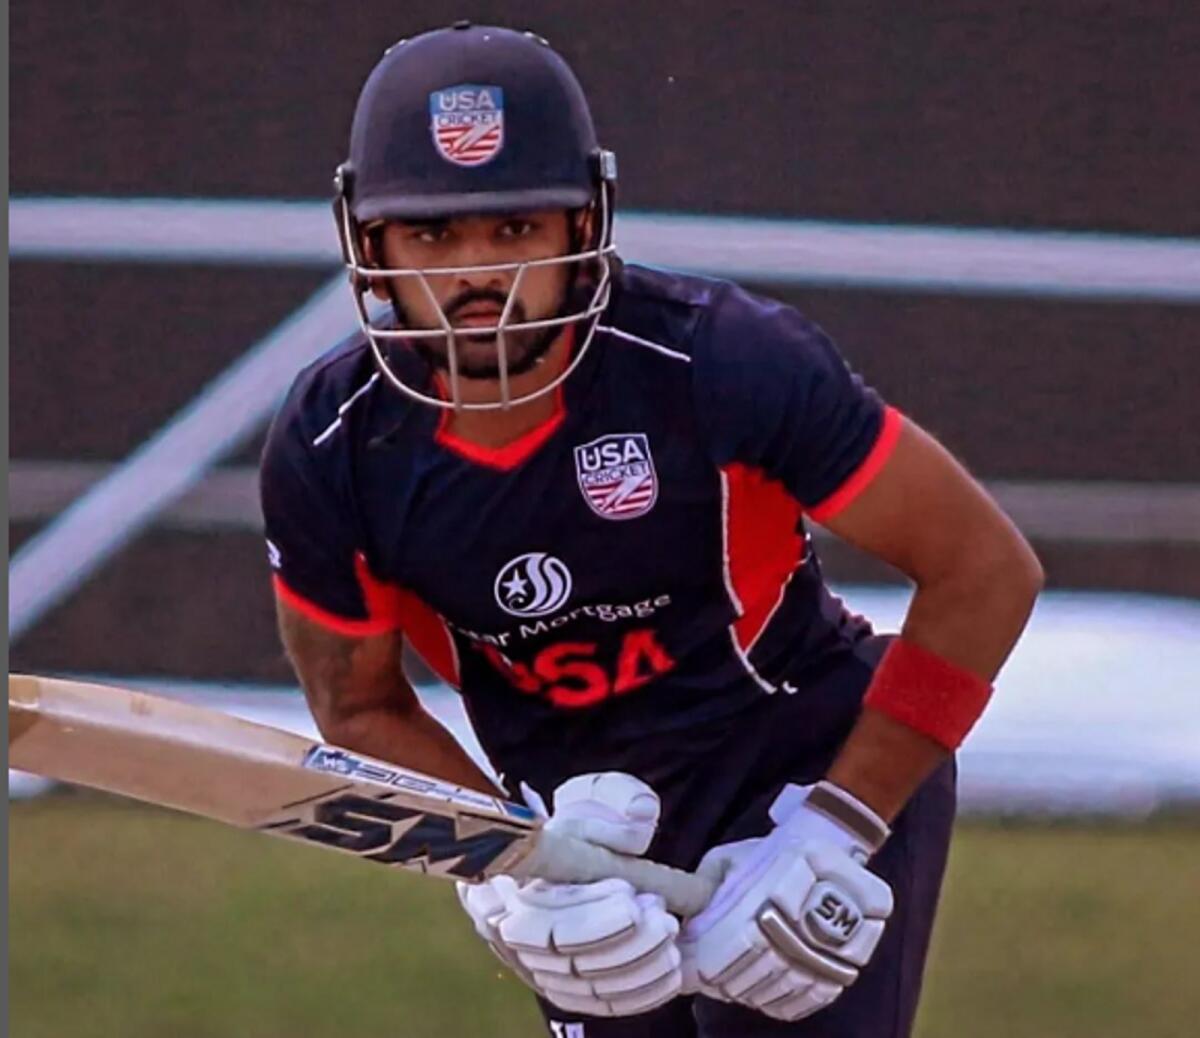 Monank Patel top scored for USA. - Instagram